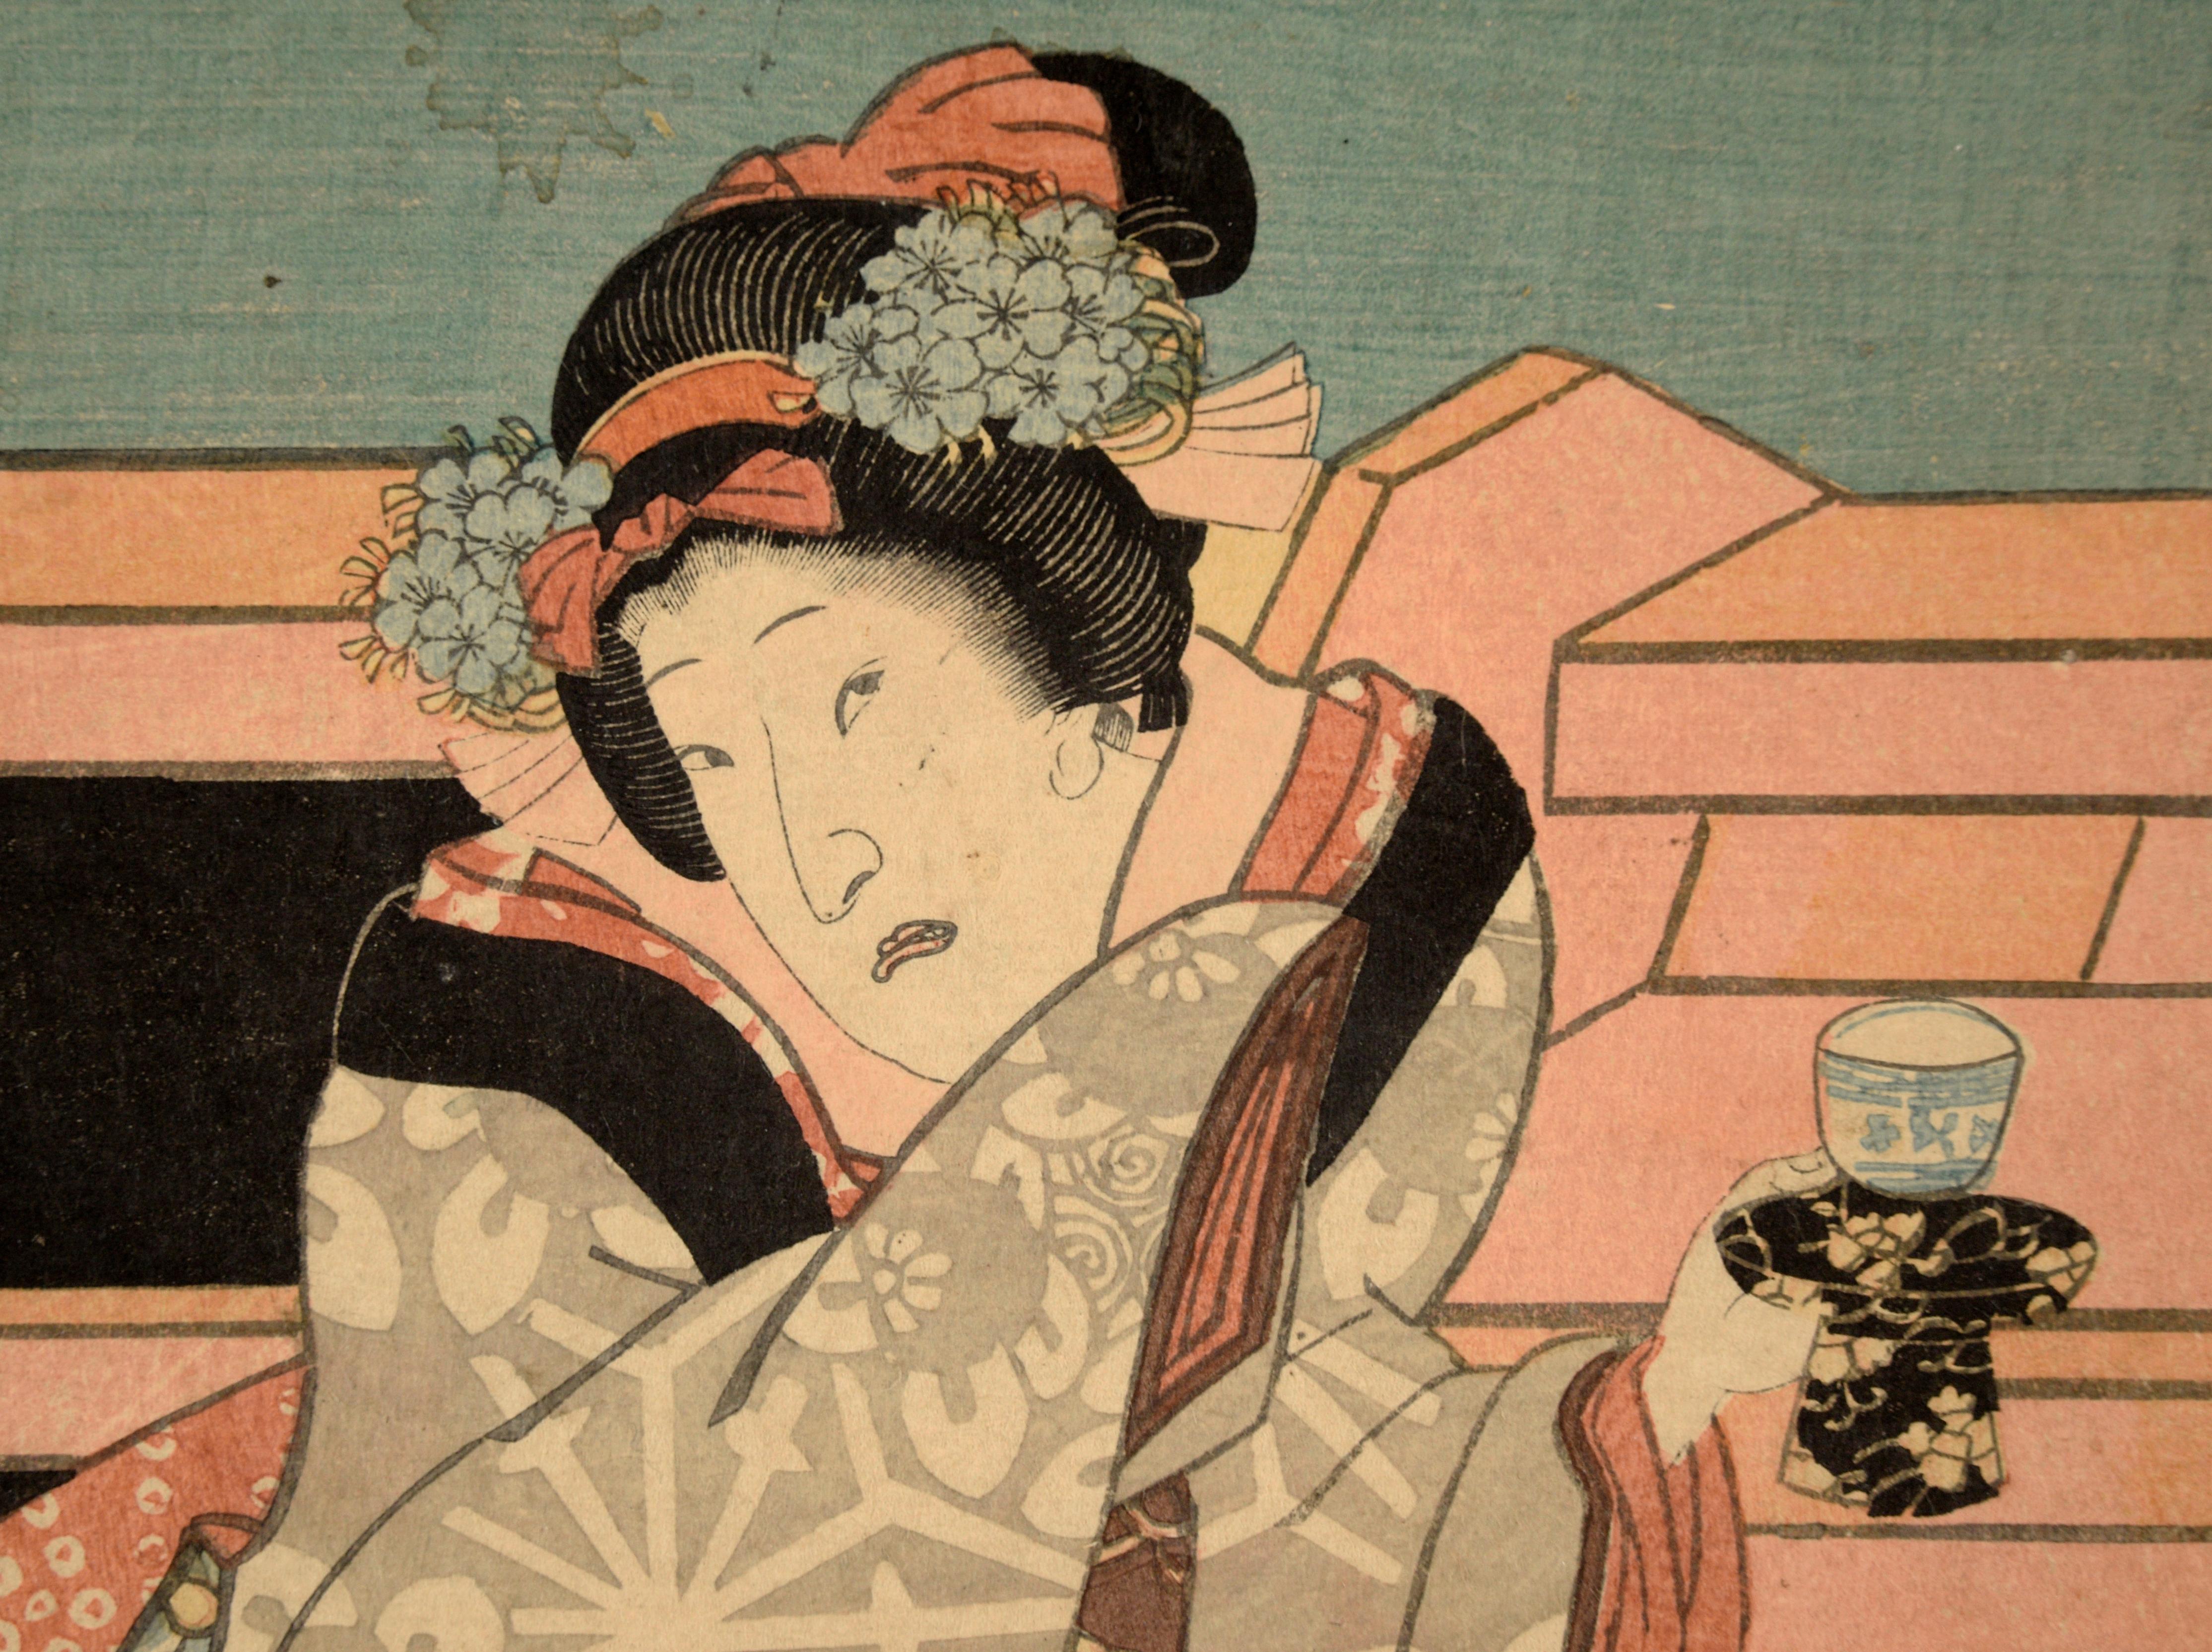 Woman Drinking Tea - Mid 19th Century Figurative Japanese Woodblock Print

Beautiful mid 19th century figural Japanese woodblock print of a woman drinking tea by Utagawa Toyokuni III (Kunisada) (Japanese, 1786-1864/5). Artist's chop is in the lower